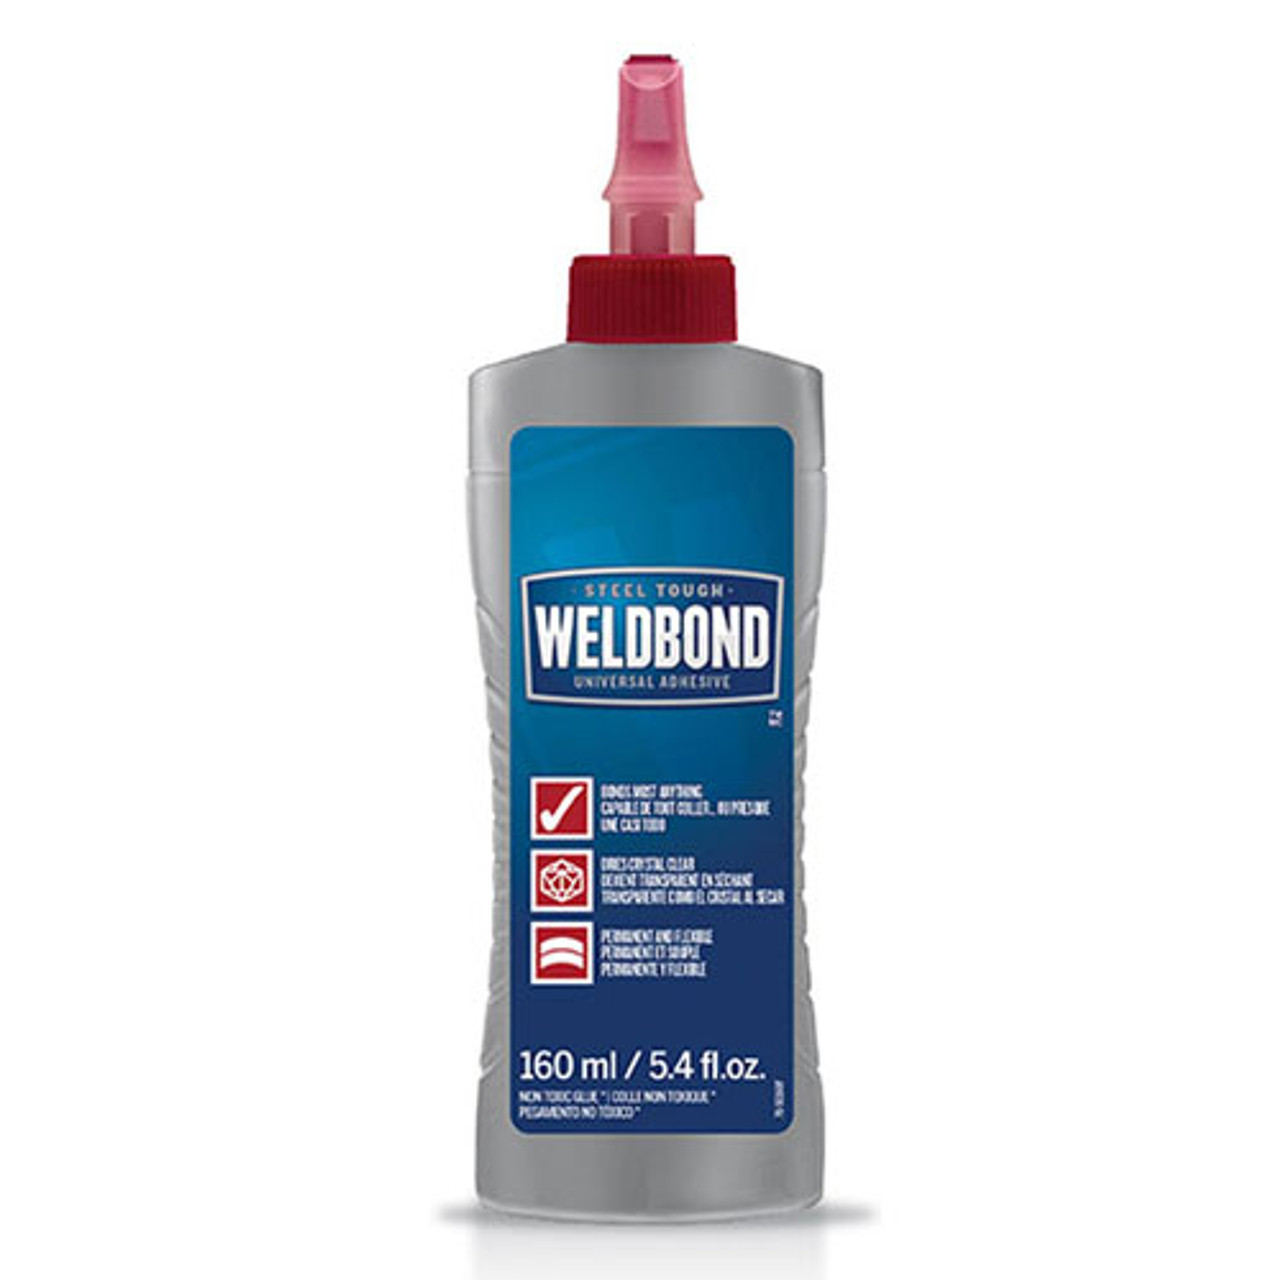 Weldbond 8-50030 Universal Space Age Adhesive 101 fl oz Non-Toxic Glue  Permanent